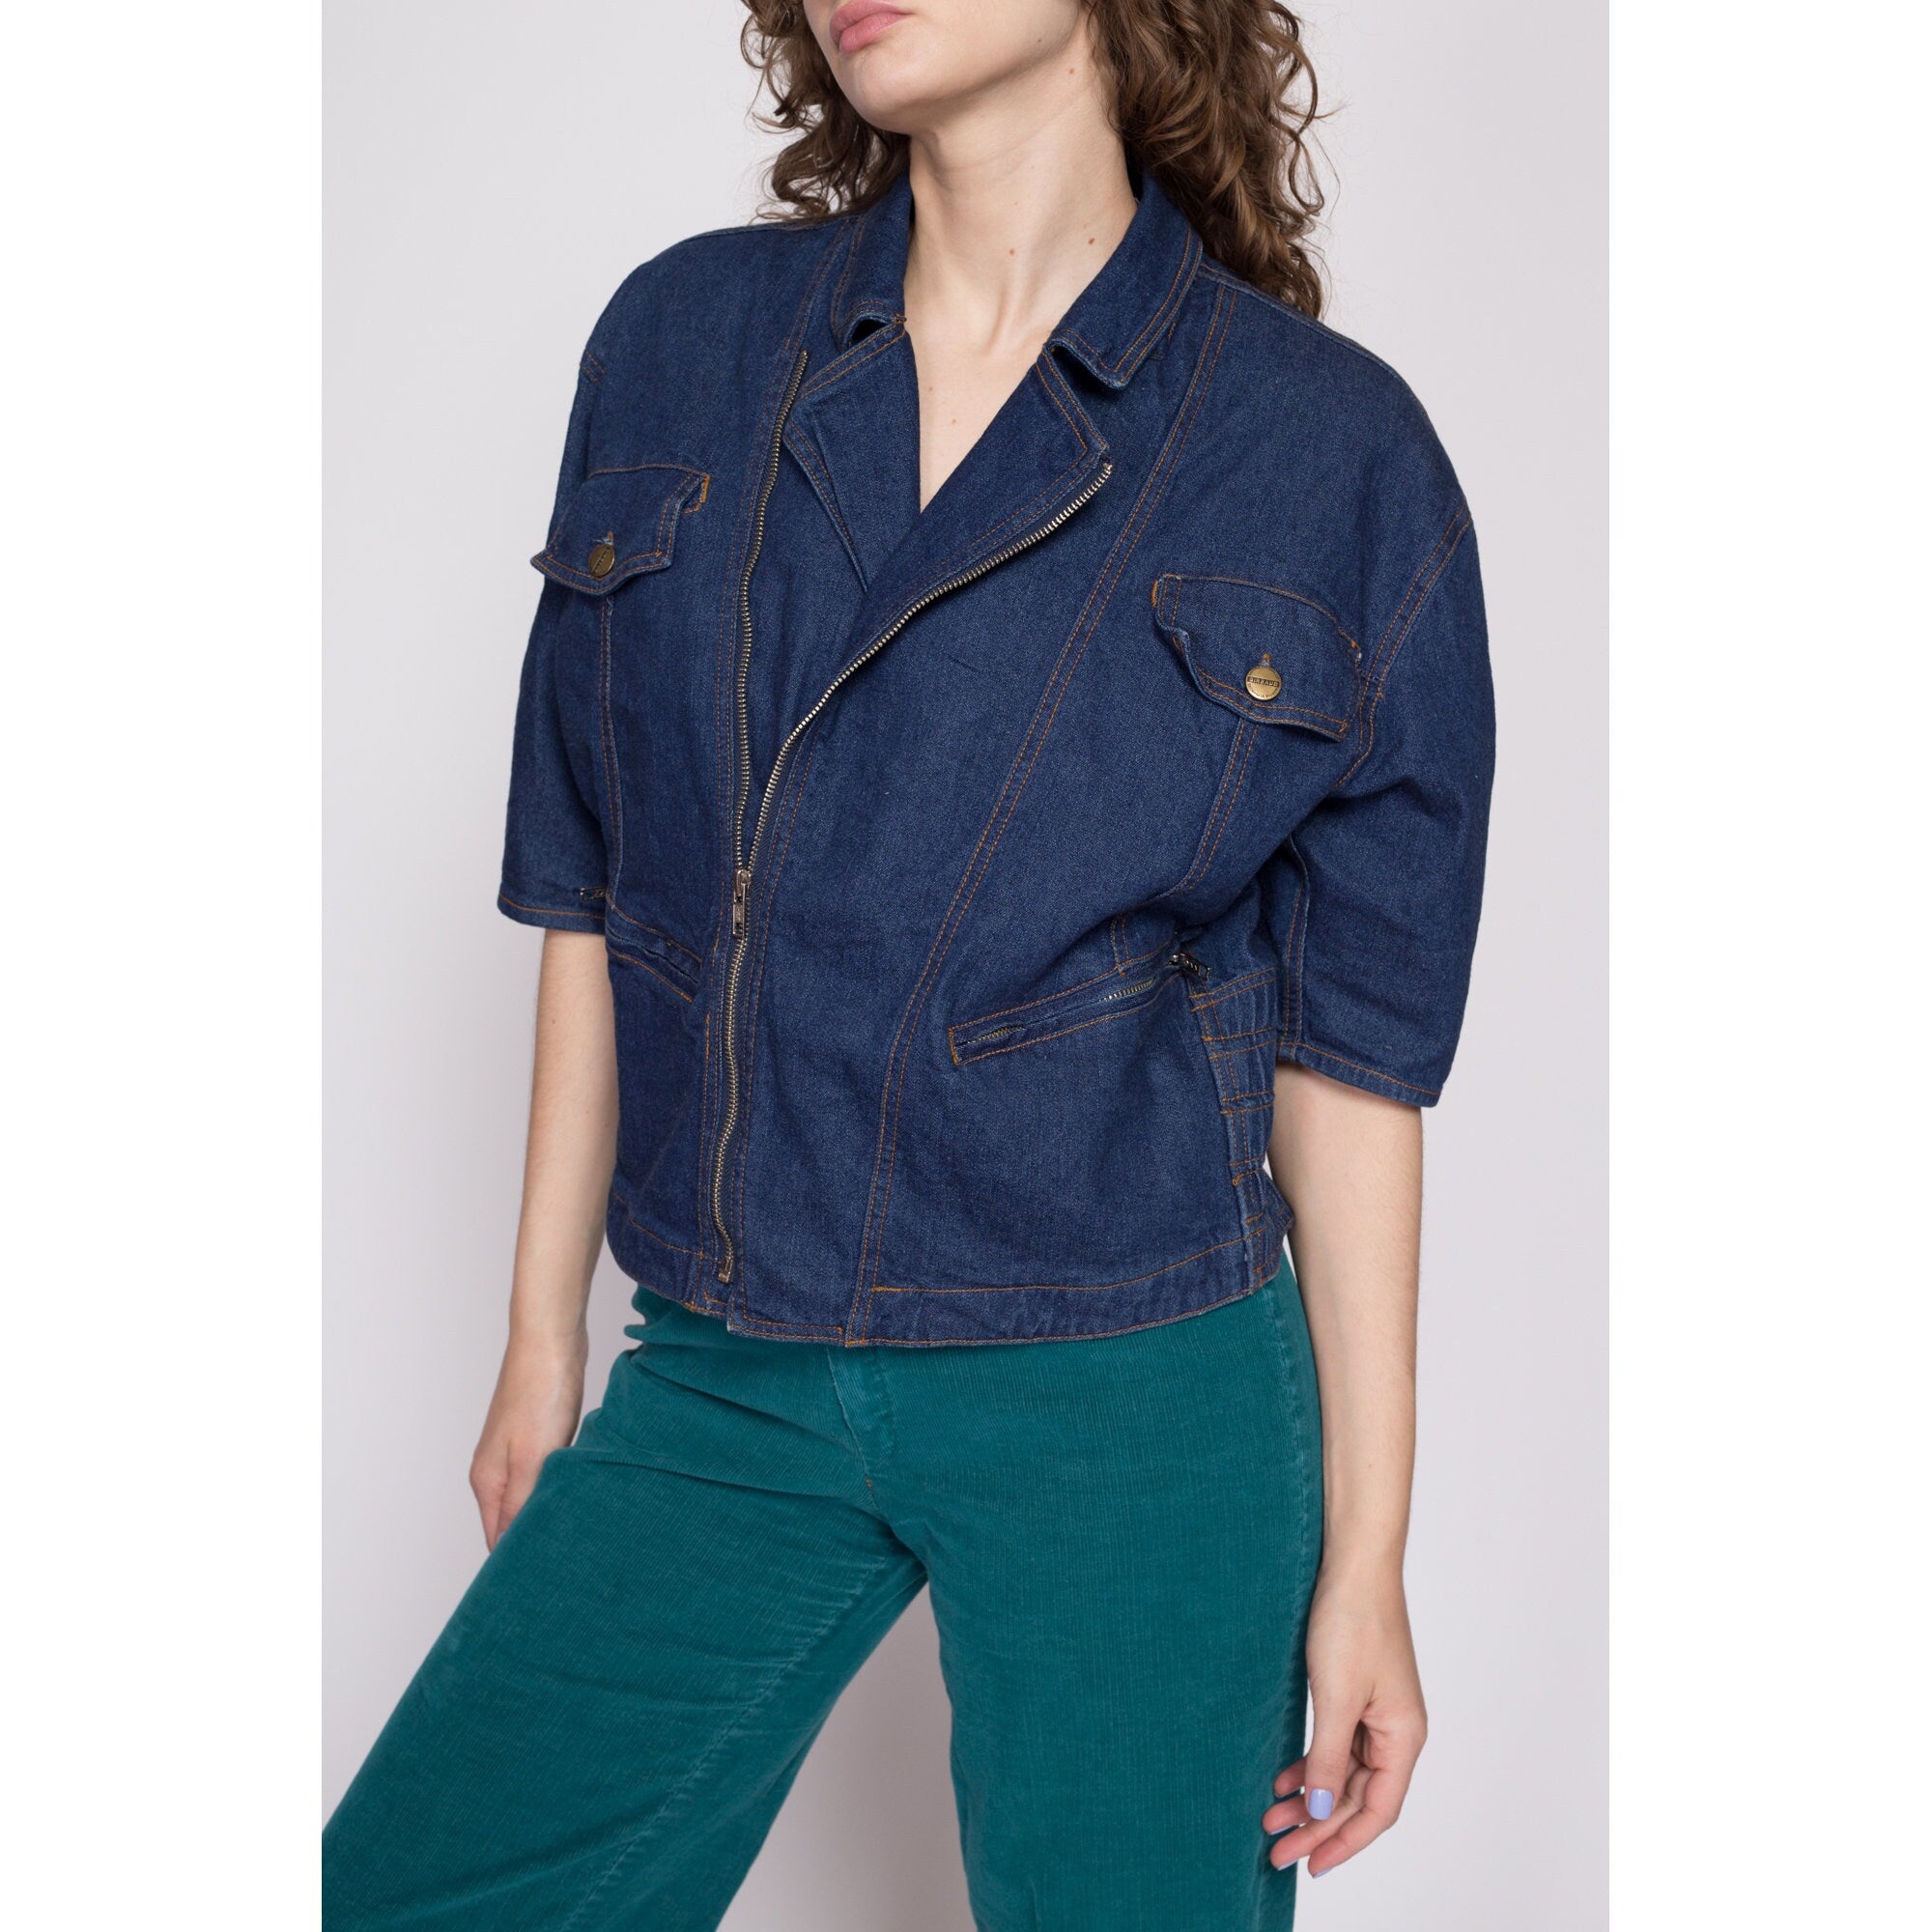 Short Jean Jacket Women Button Down Short Sleeve Round Neck Ripped Summer  Light Cropped Denim Jacket at Amazon Women's Coats Shop